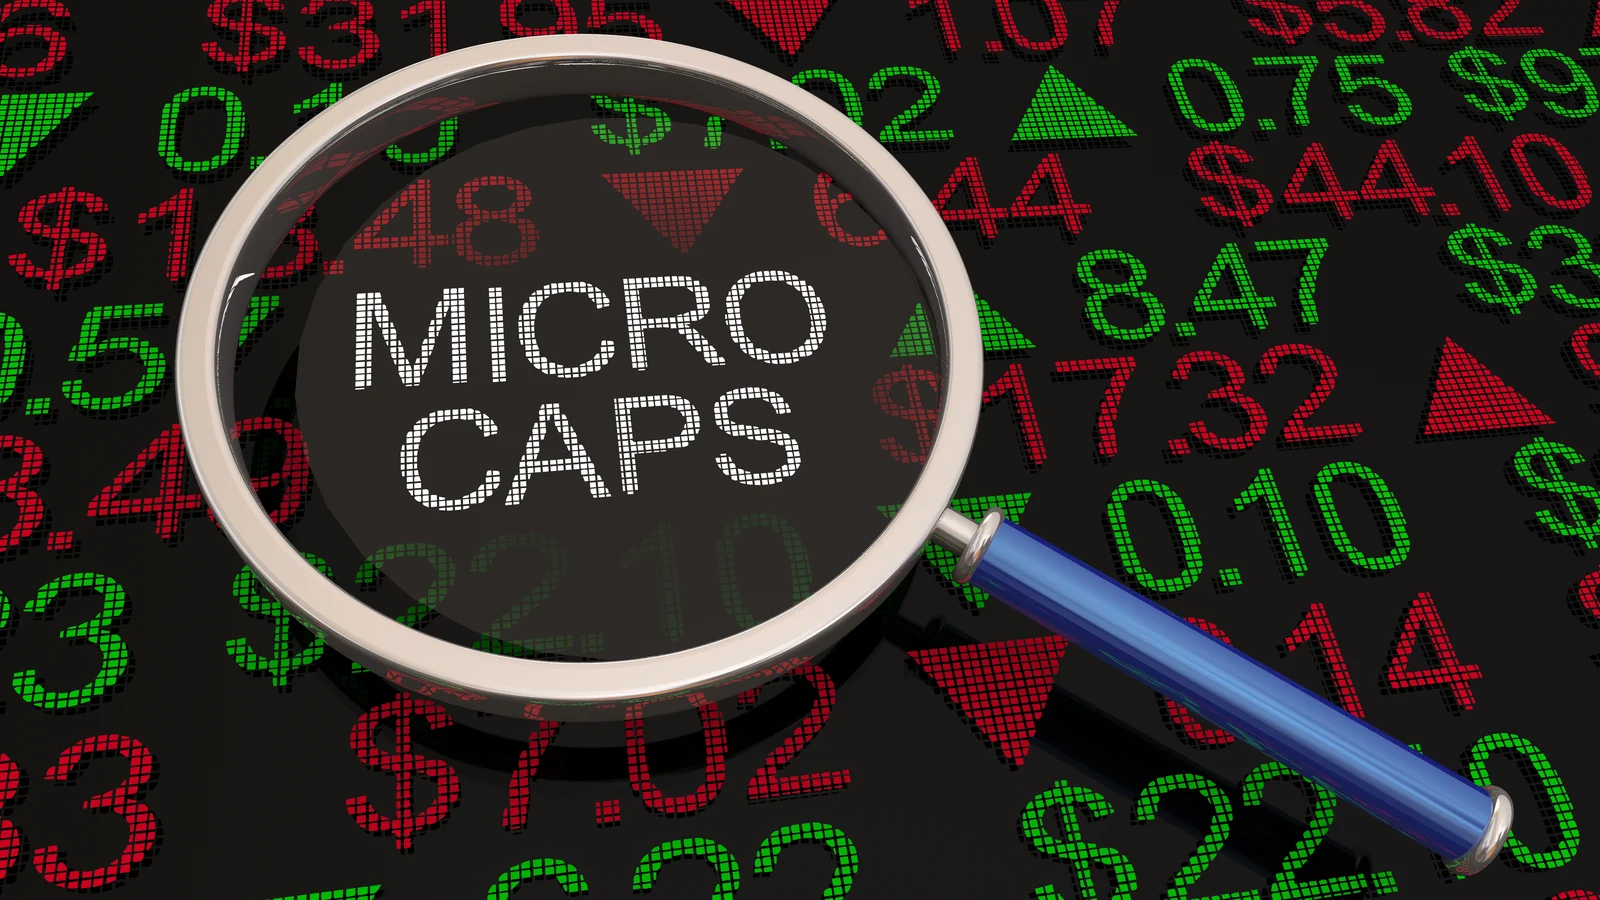 Microcap Stocks